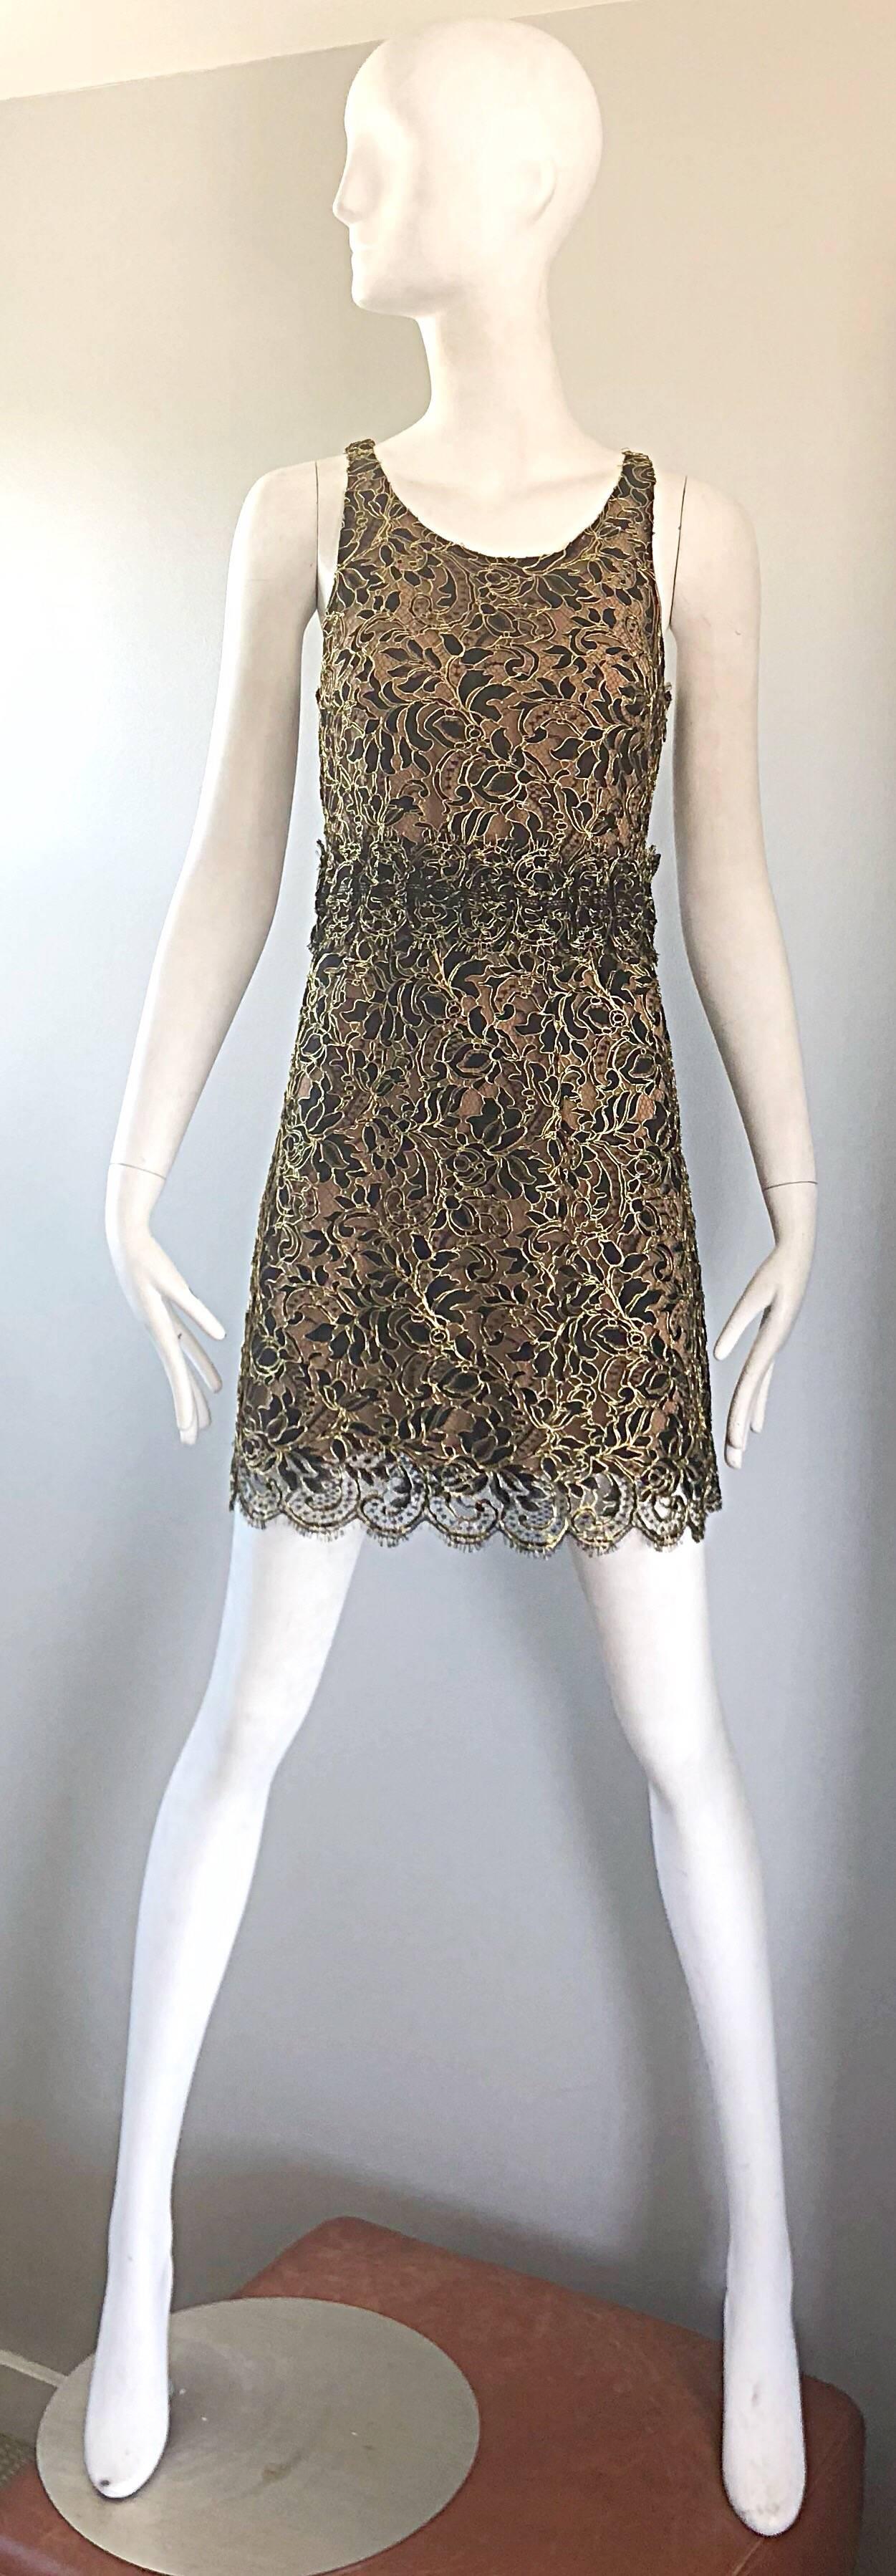 Balenciaga by Nicolas Ghesquiere Black + Gold + Nude Silk Chiffon Lace Dress For Sale 7